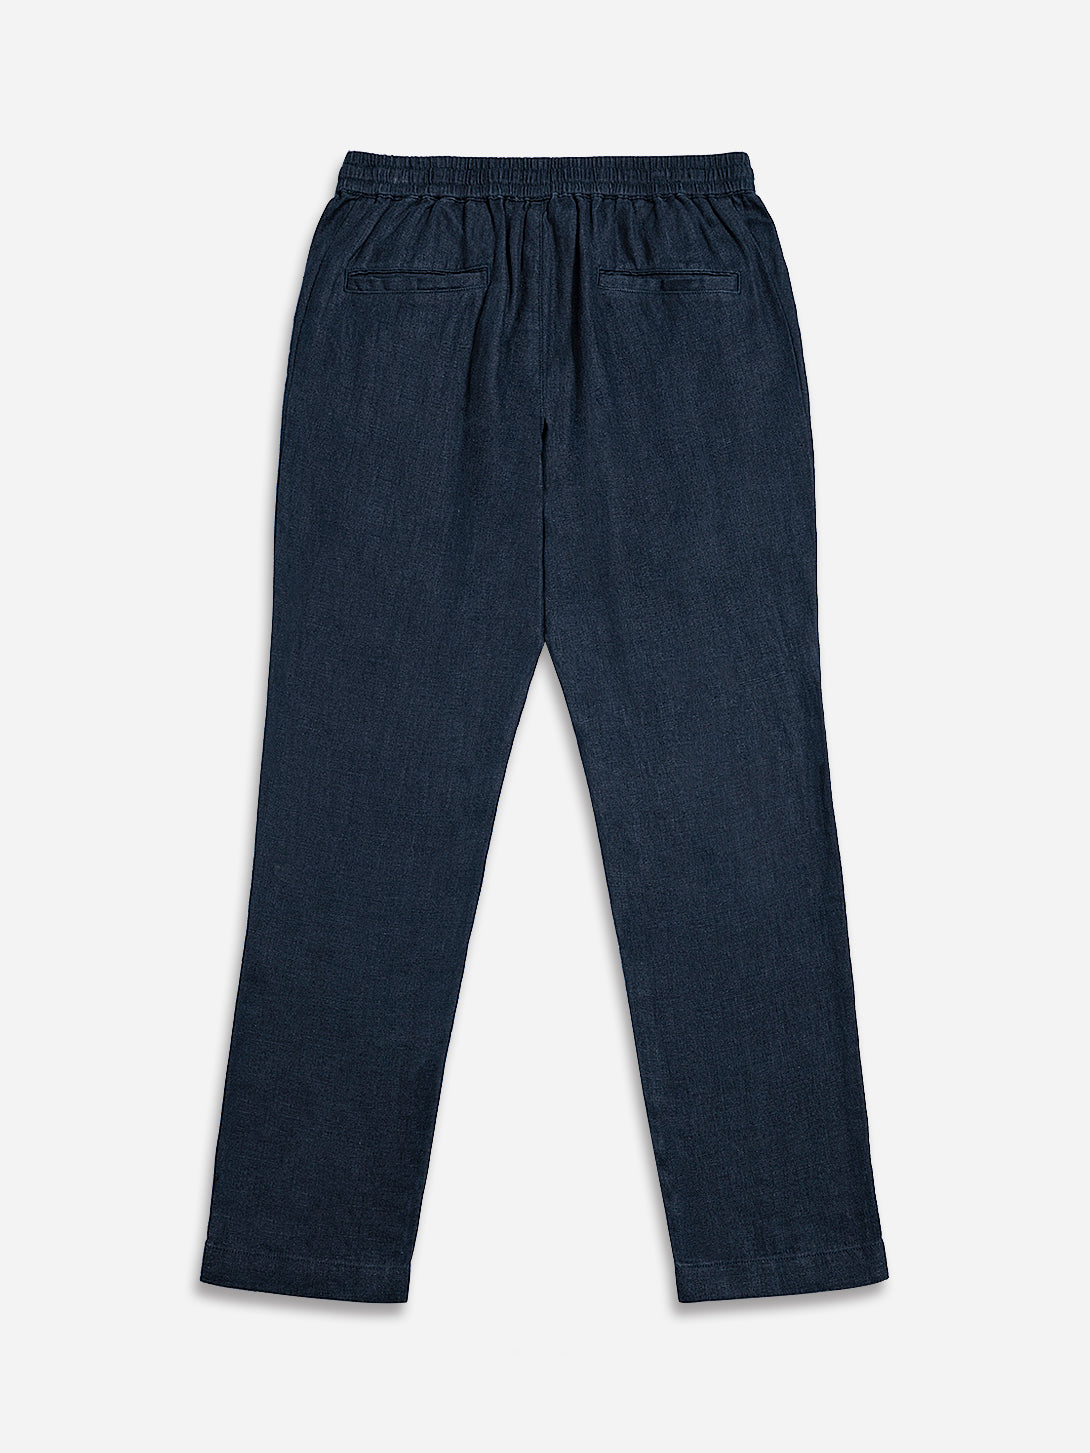 Navy Ward Linen Pants Mens ONS Sumer Linen Drawstring Trouser Pockets 100% Linen